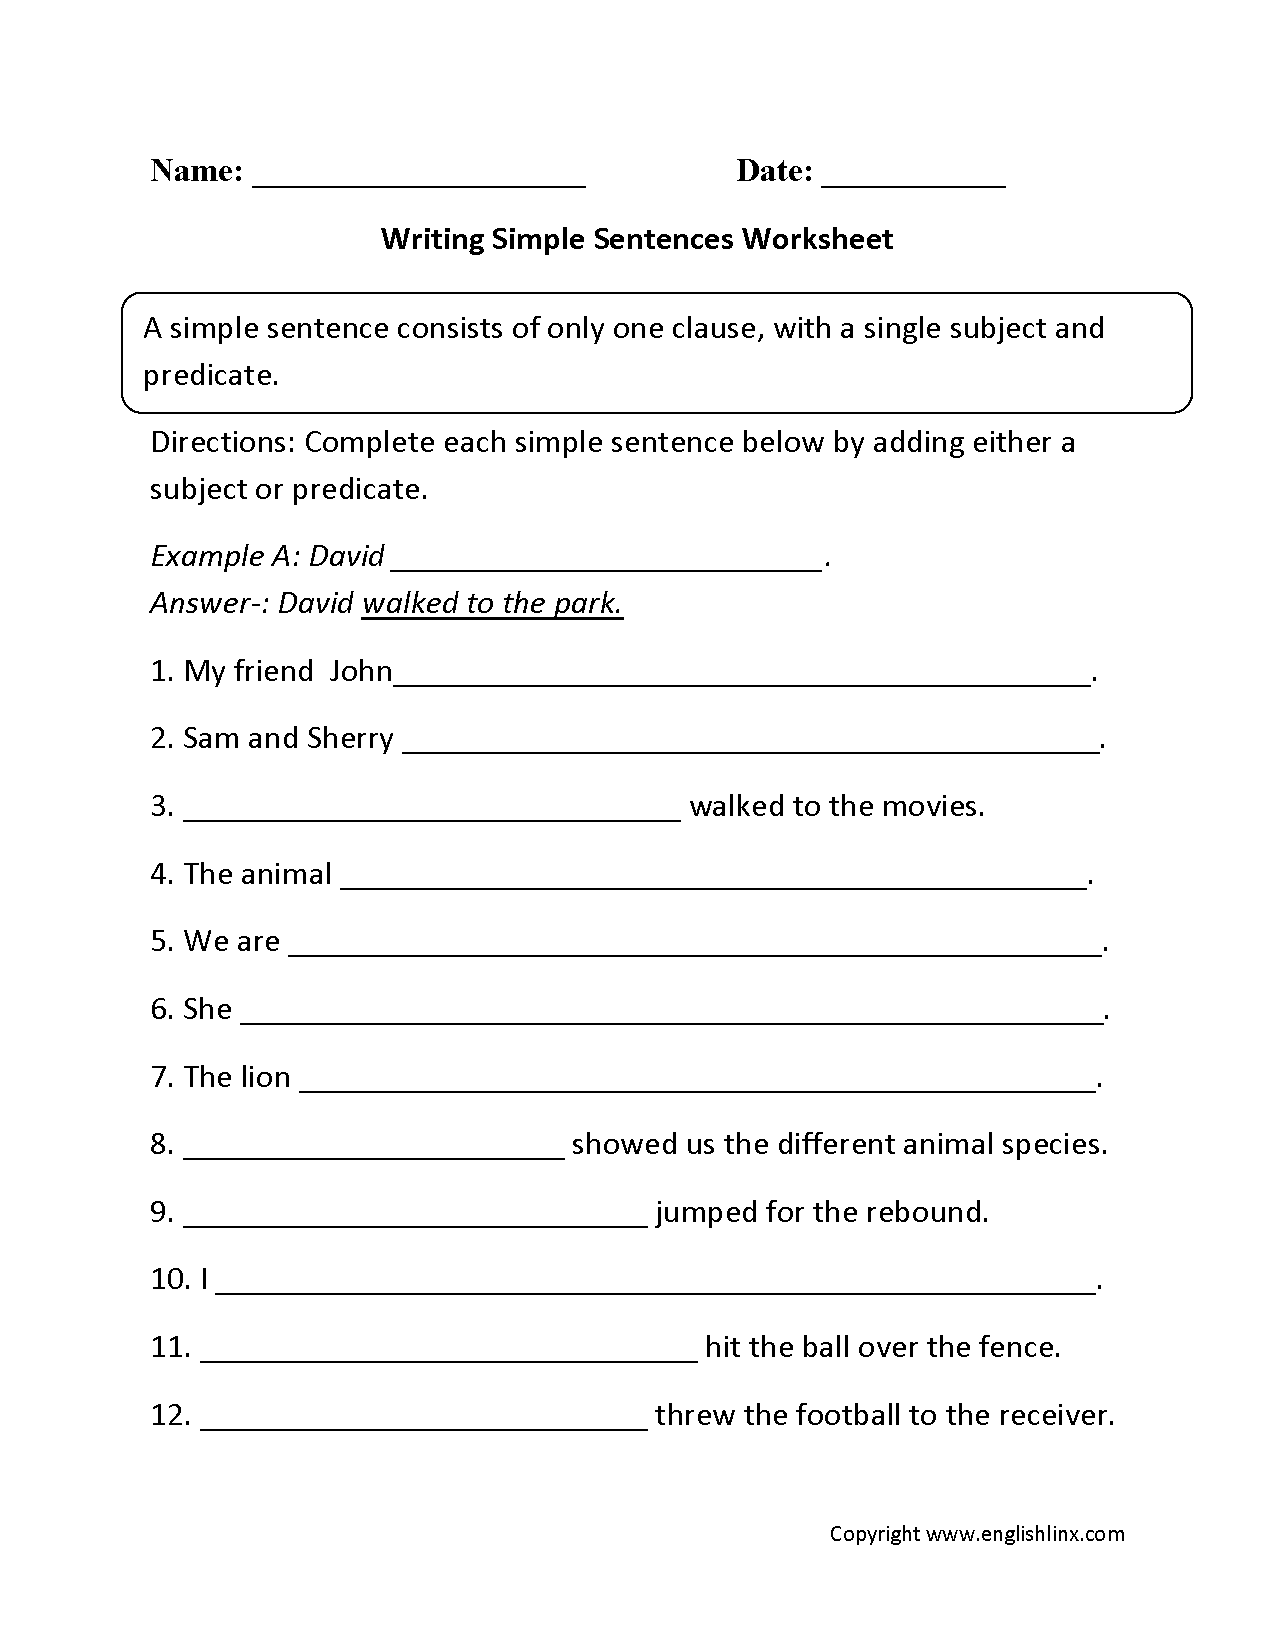 4th-grade-copying-sentences-worksheets-sentenceworksheets